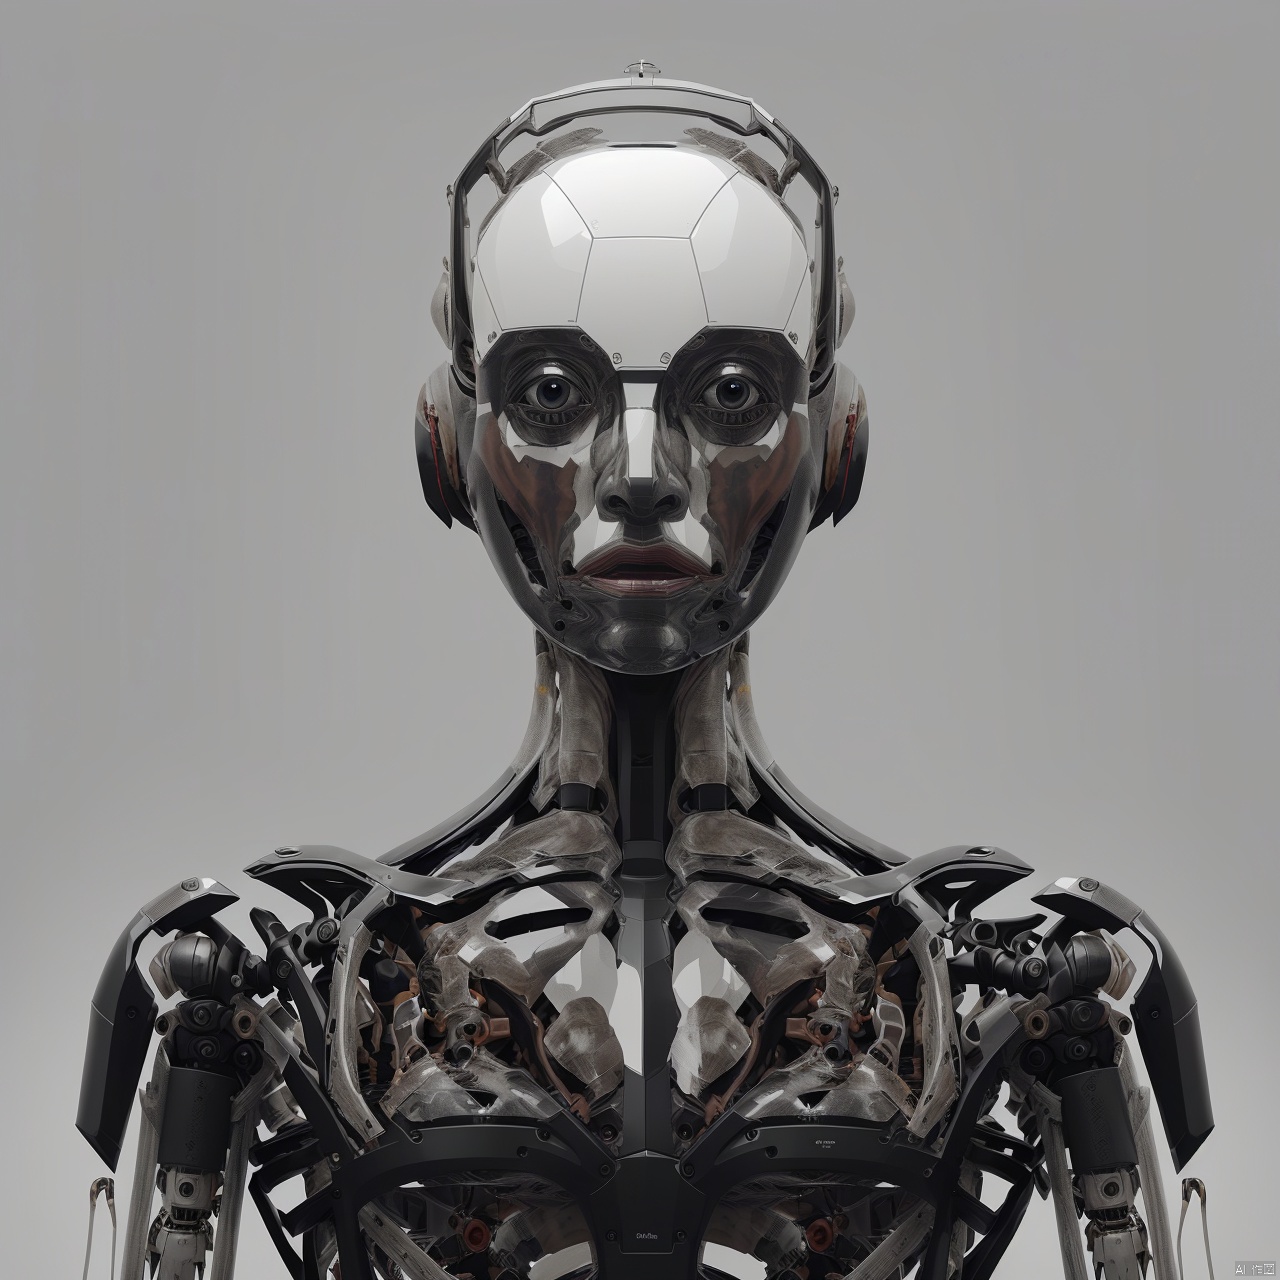  A  White robot, minimalist styling, industrial design, human-like, exoskeleton, transparent, grey background,, inhuman, robot, mecha, science fiction, realistic, non-human robots, A Robot